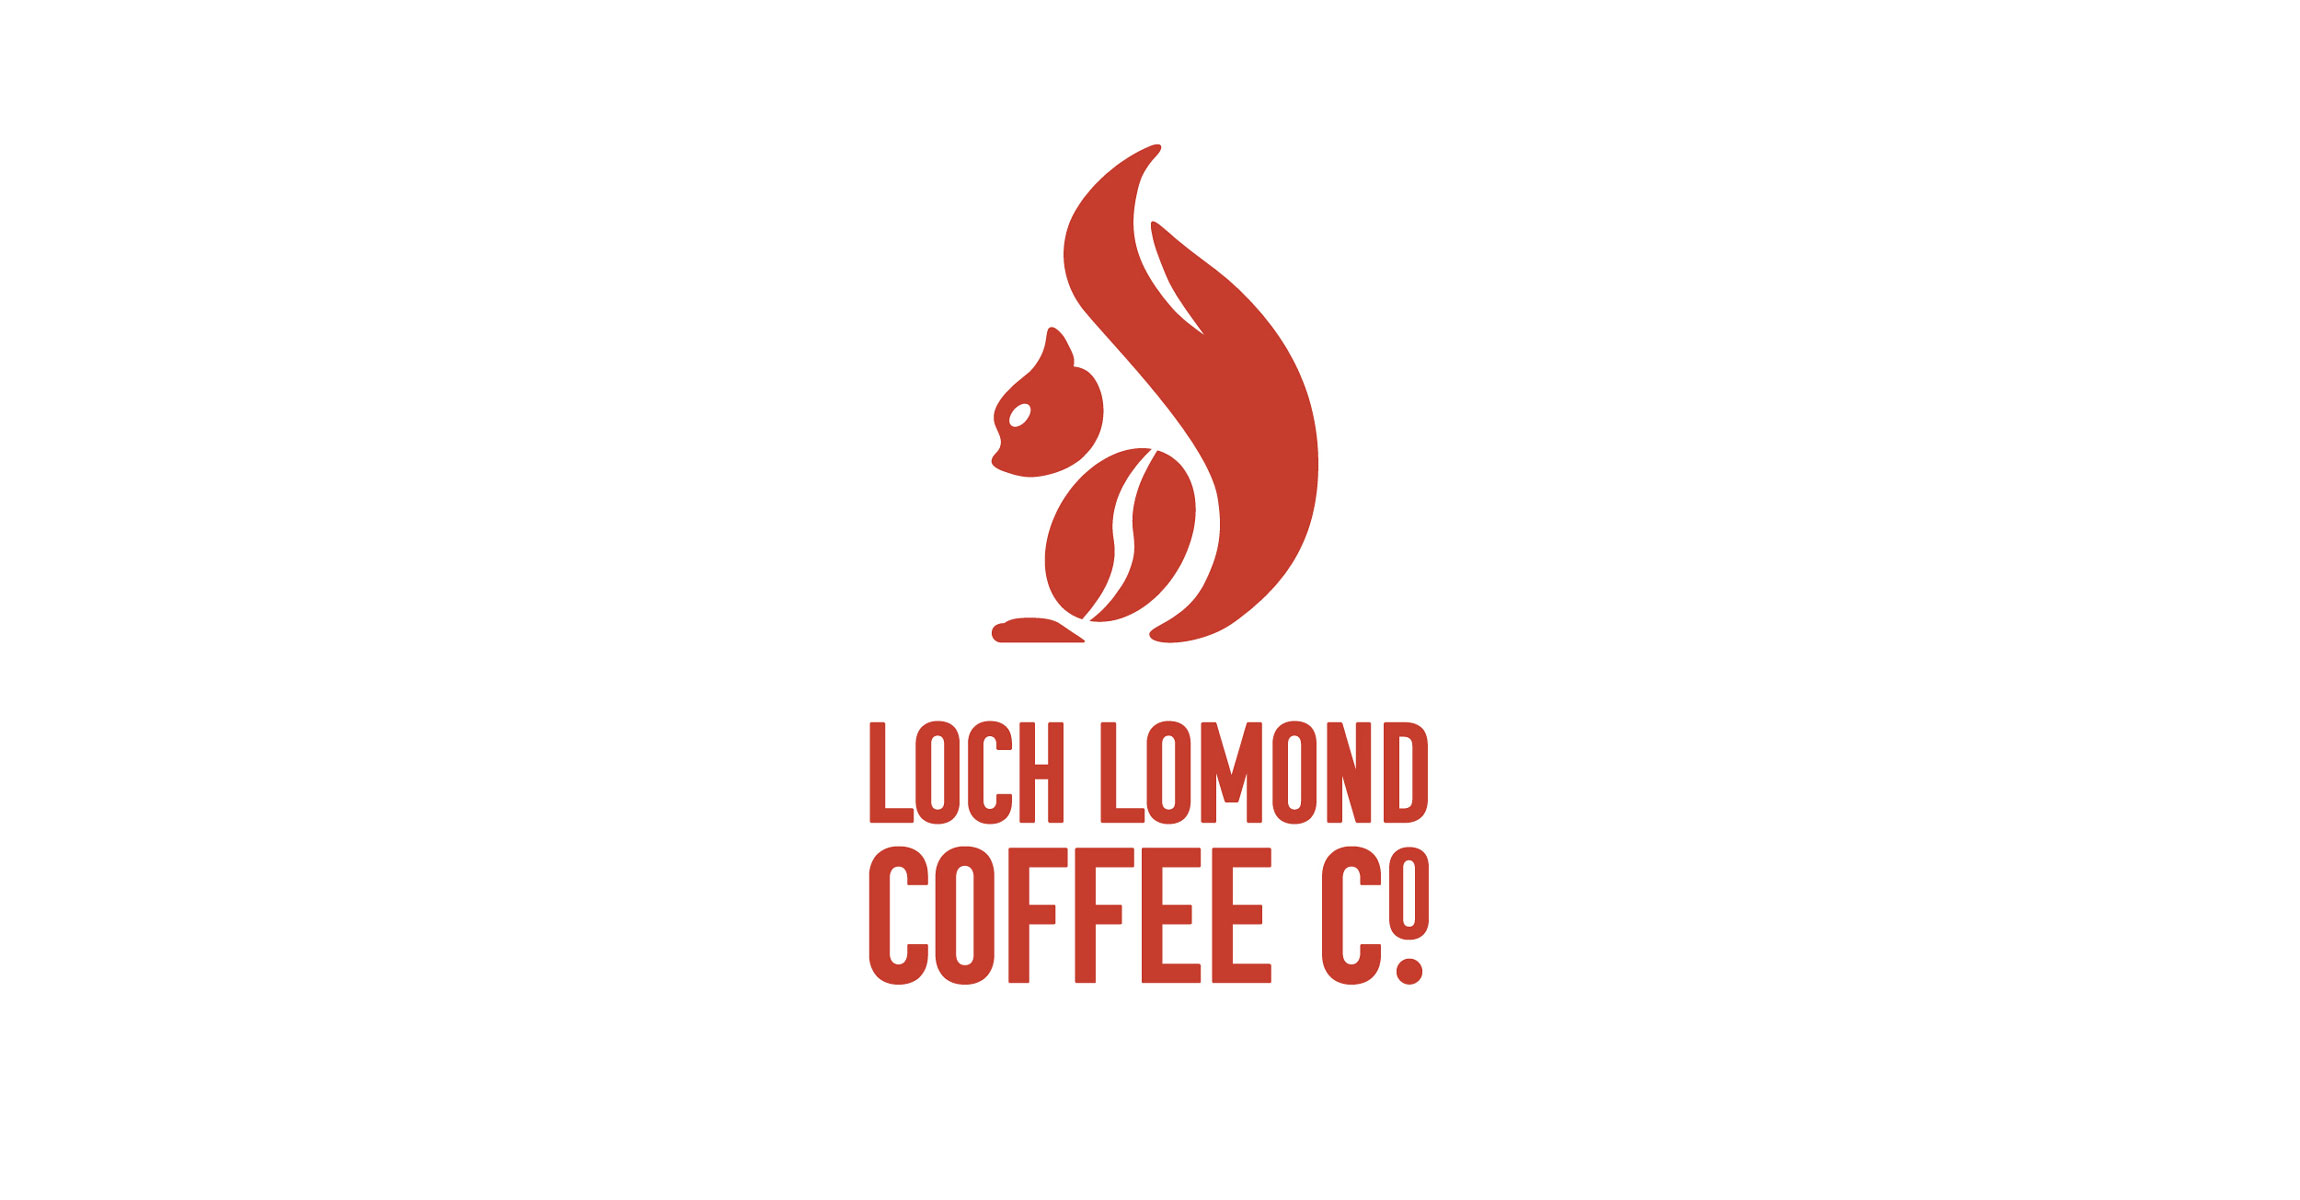 A New Coffee Brand for Loch Lomond